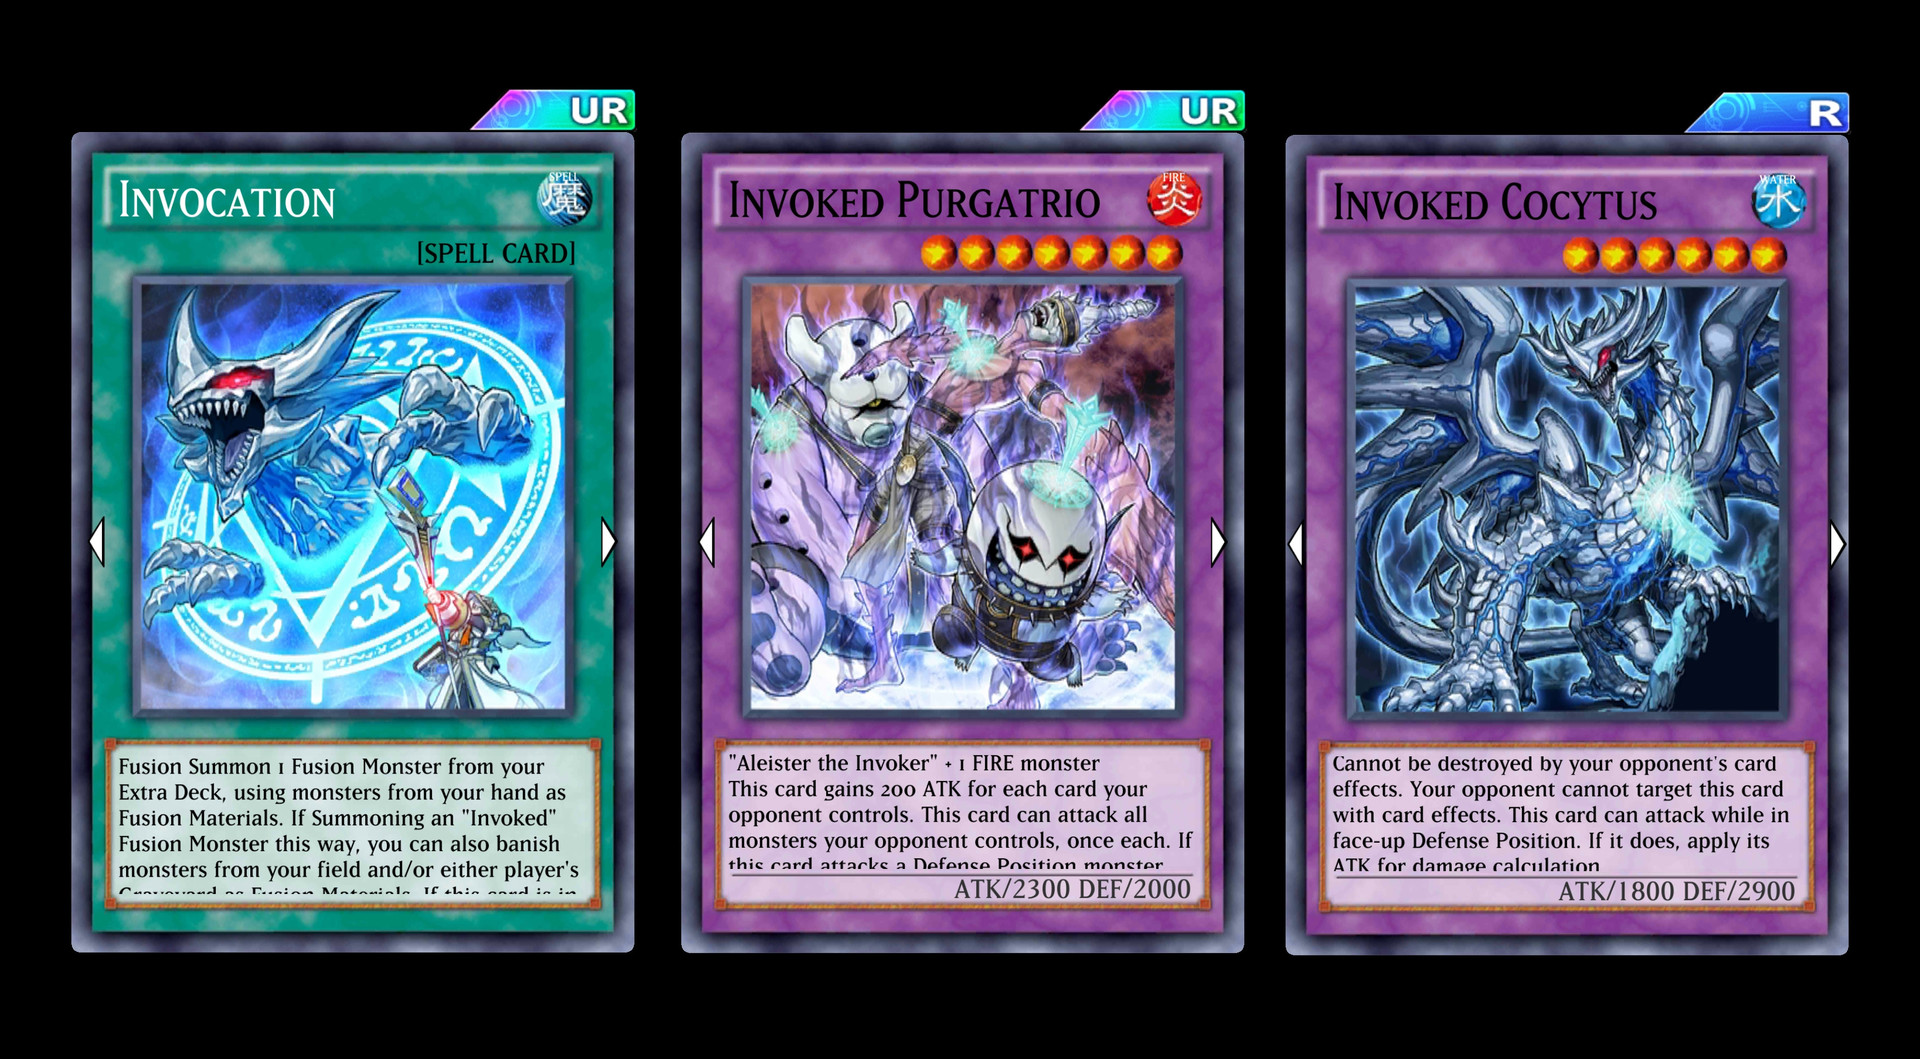 Invoked Elementsabers core cards